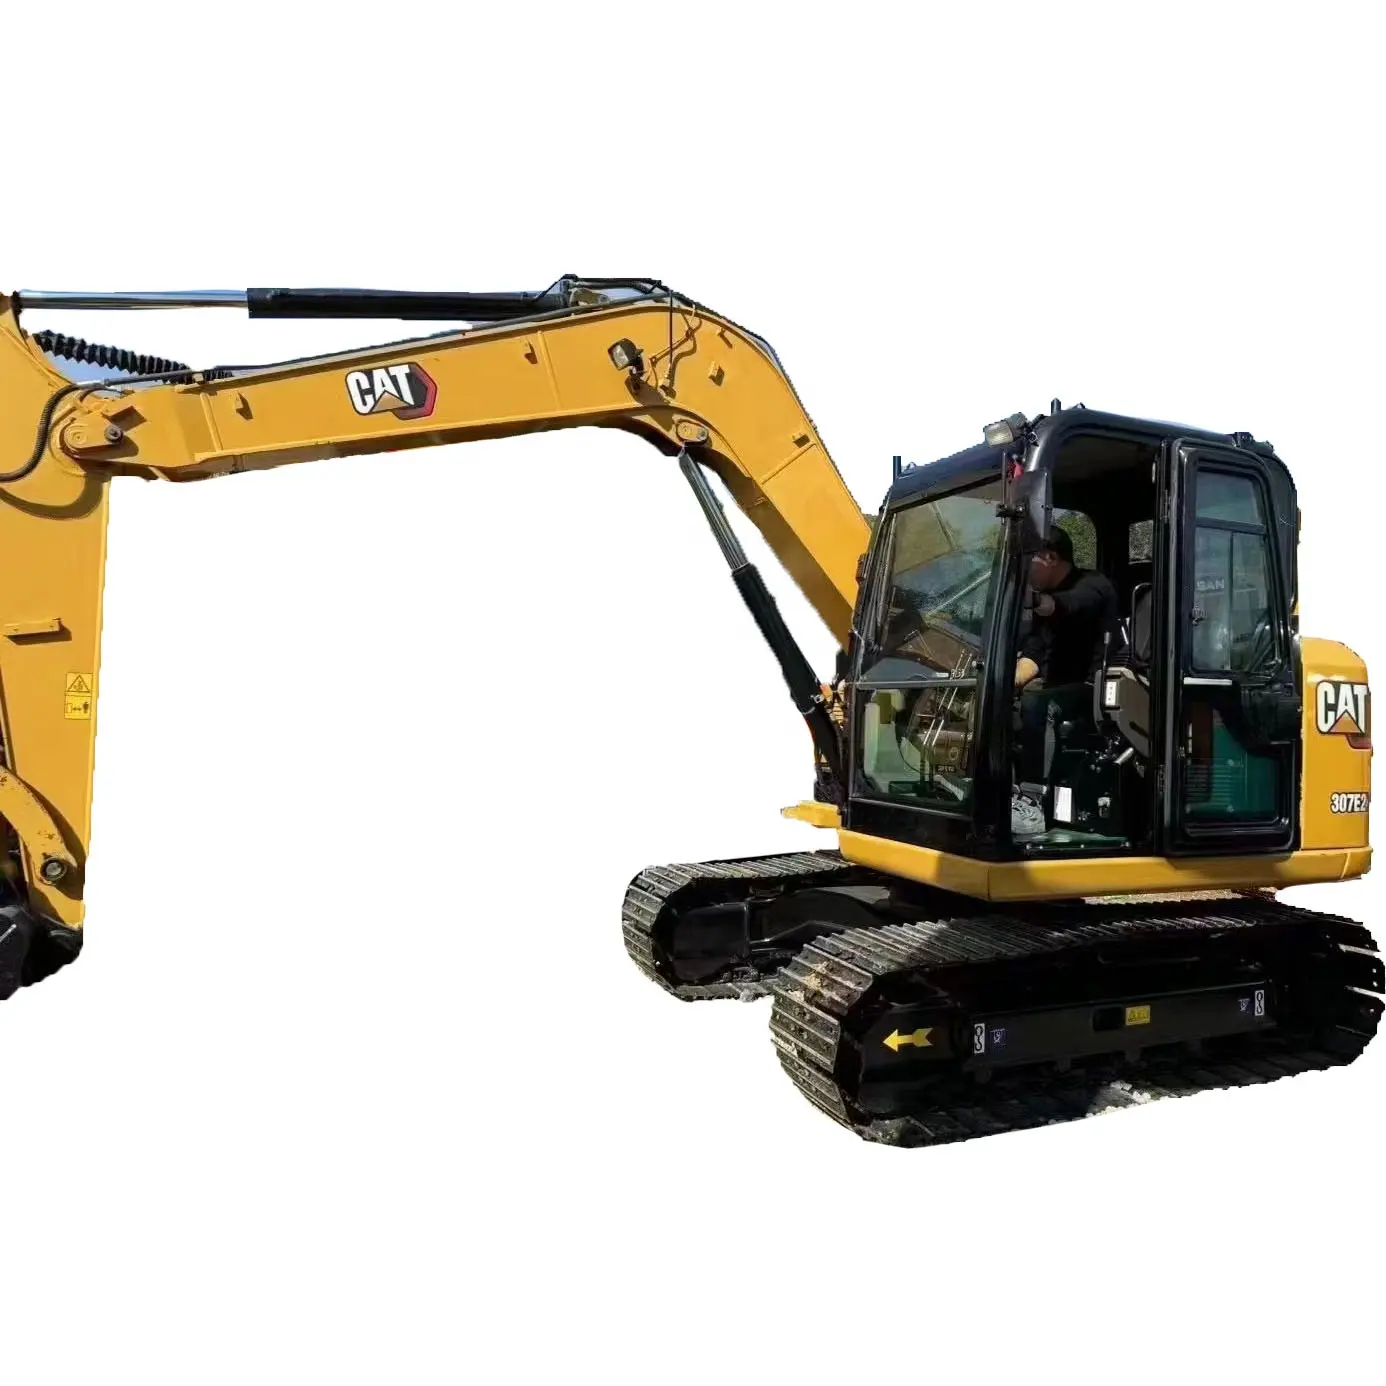 Used excavator CAT307 Japan brand Caterpillar Minor excavator 7Ton used digger for sale cheap price original pain